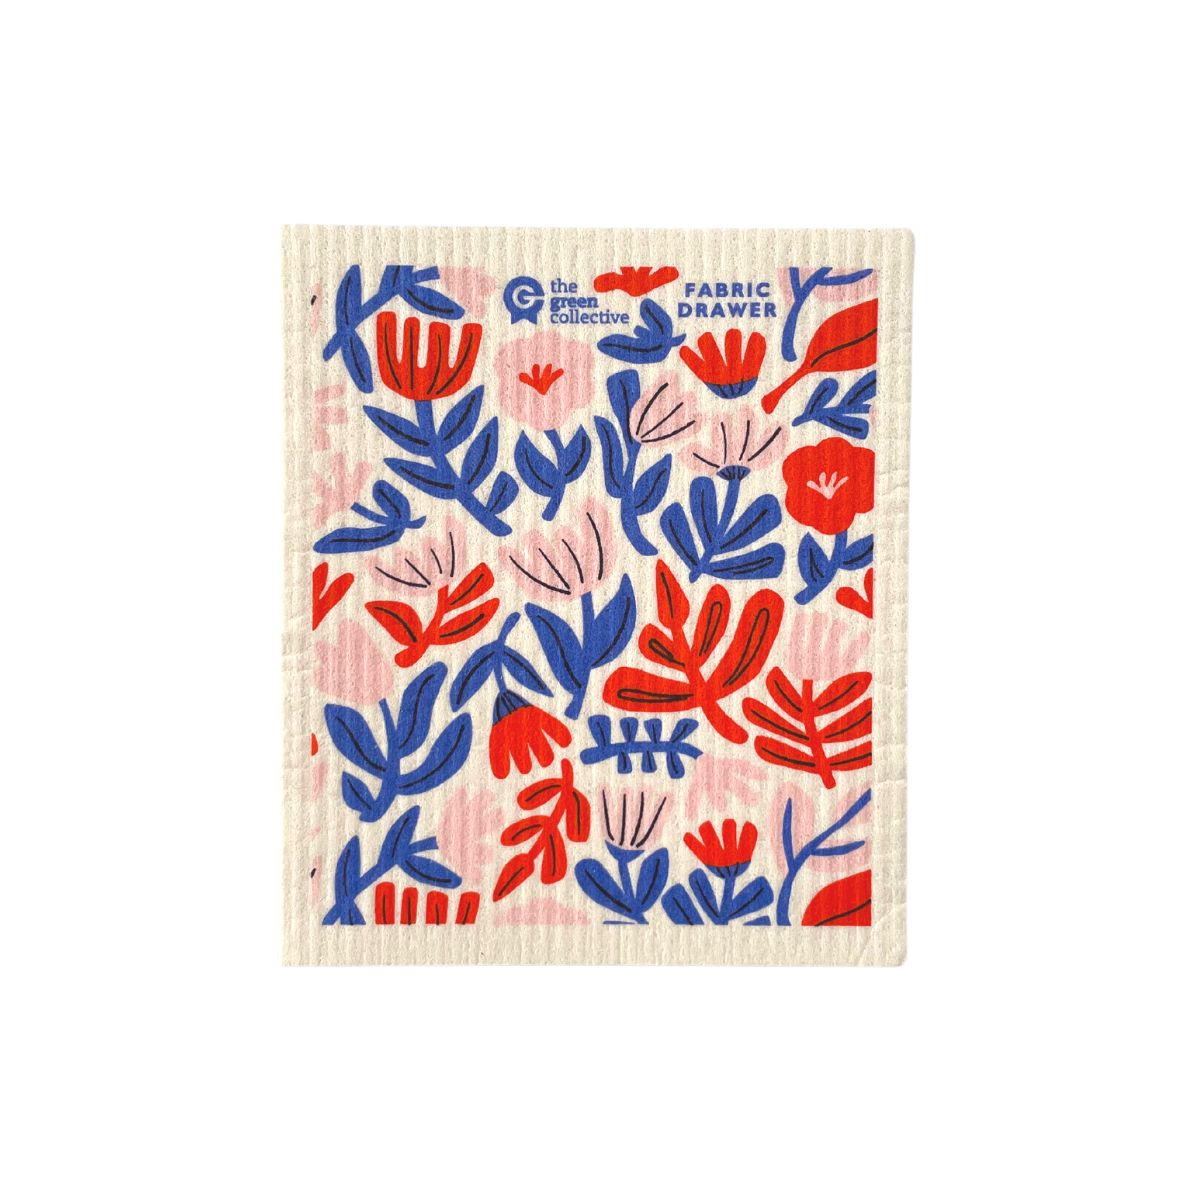 Swedish Dishcloth SPRUCE - Weaving Flowers by Fabric Drawer